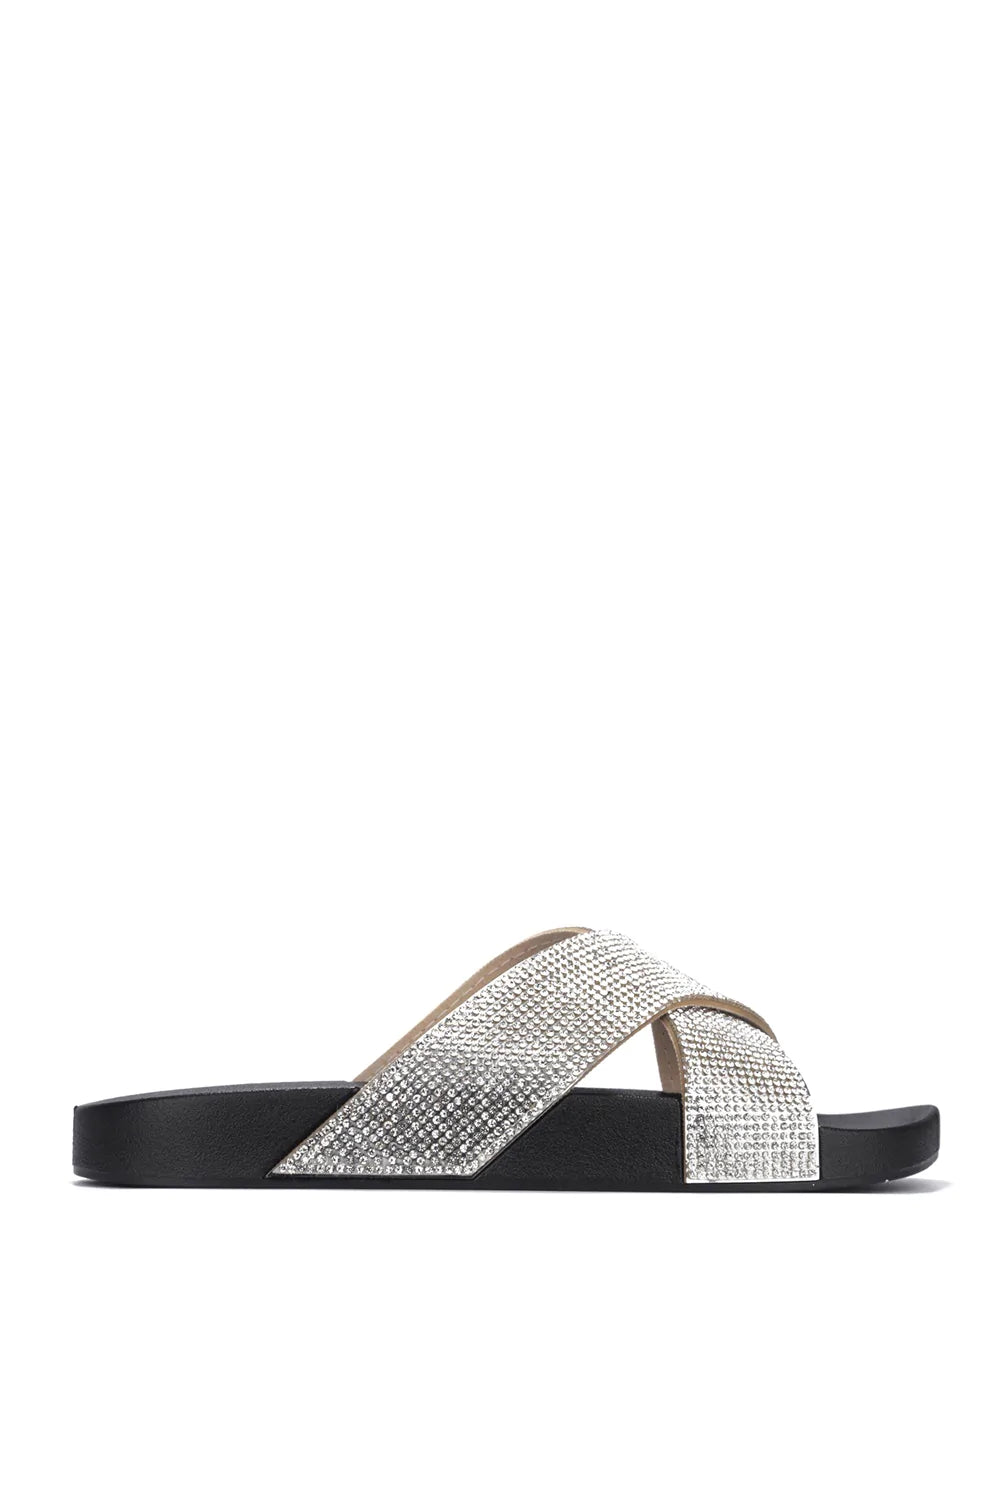 Buy Women Silver Party Sandals Online | SKU: 35-4690-27-36-Metro Shoes